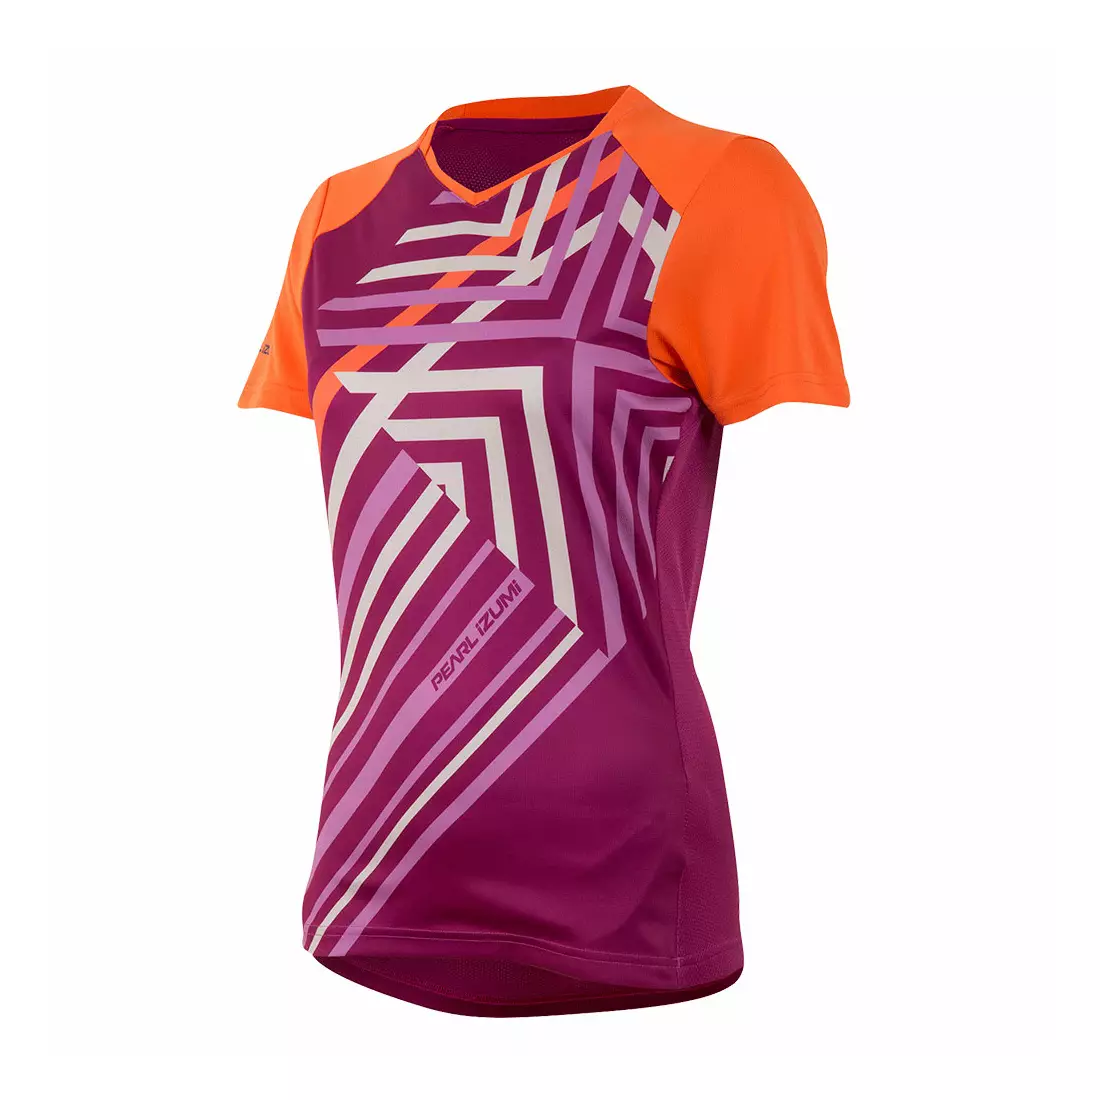 PEARL IZUMI LAUNCH women's cycling jersey 19221505-4WH, purple